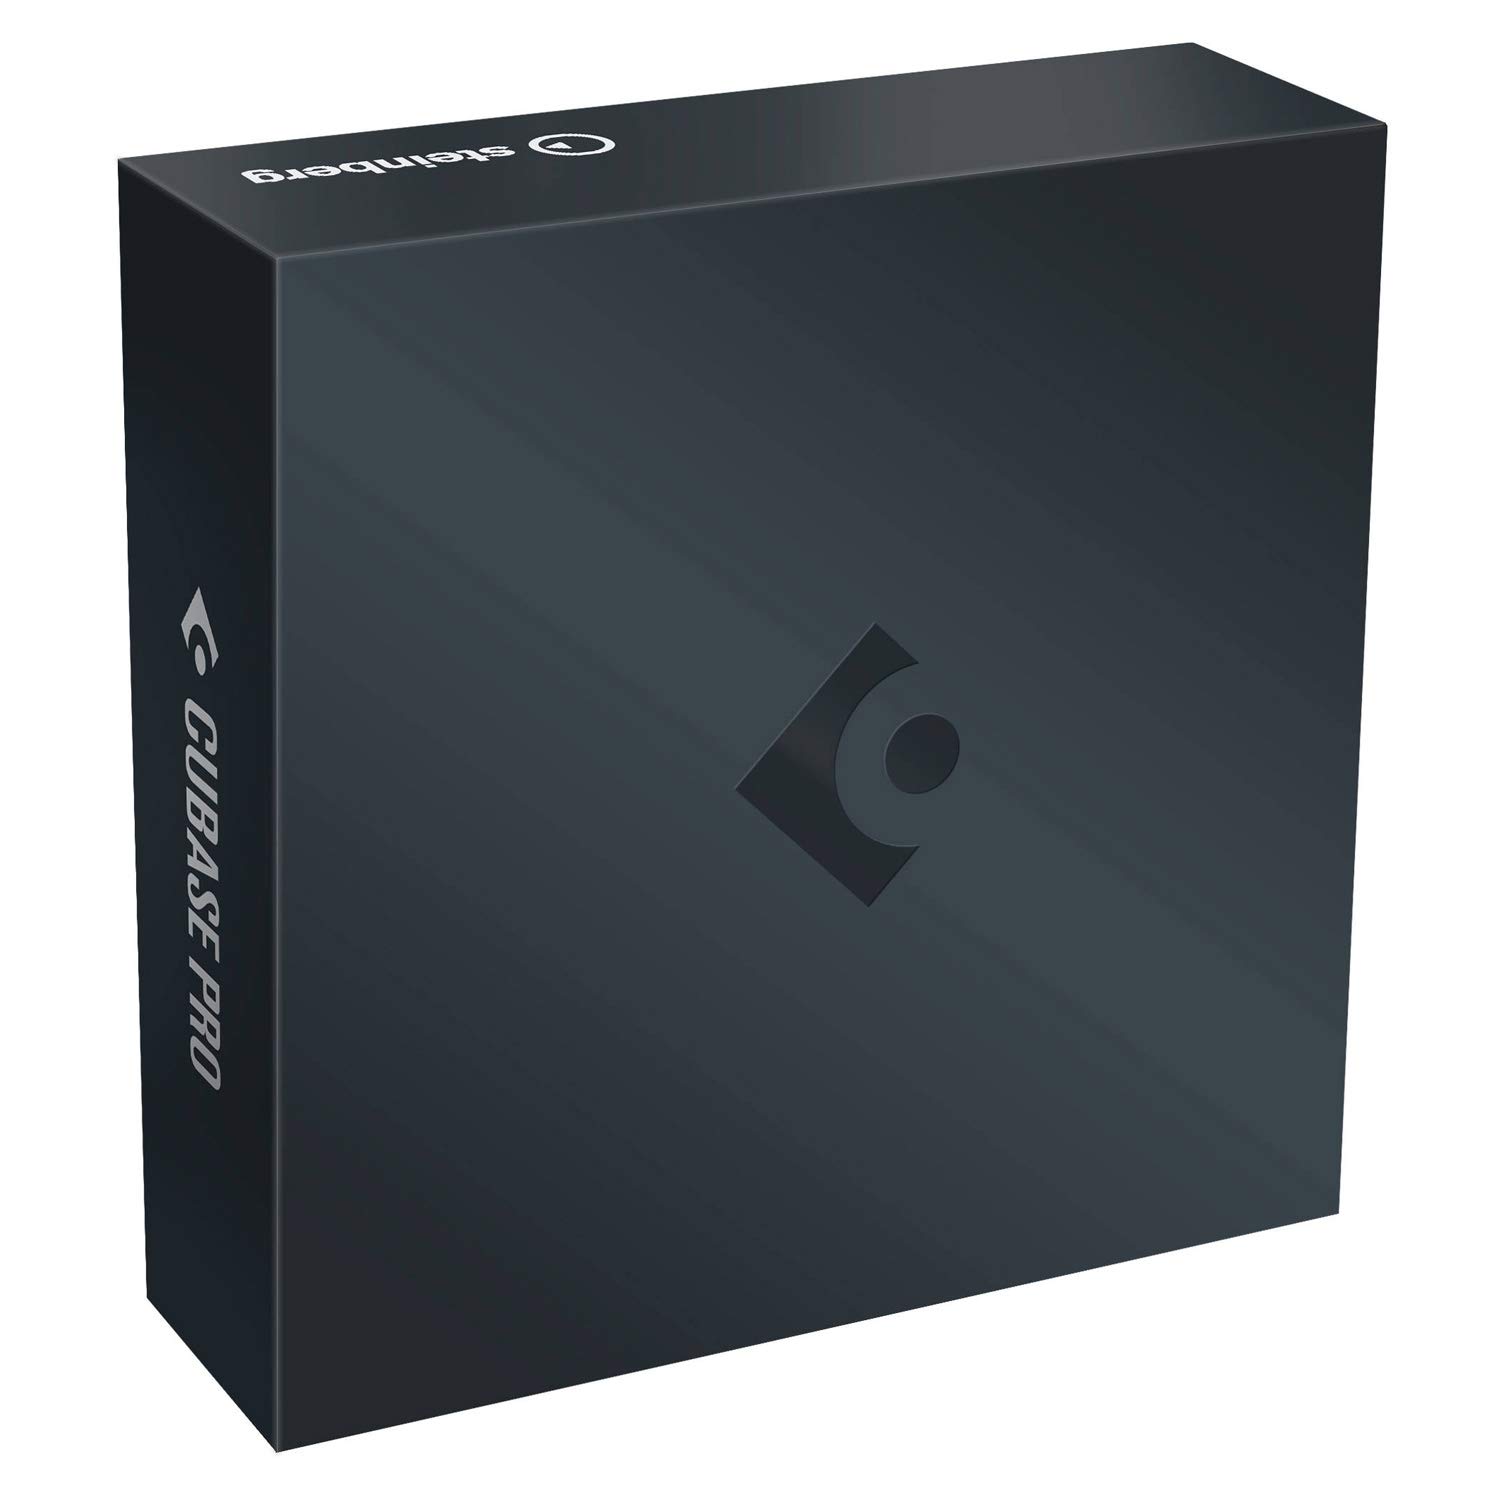 Cubase Pro 10.5.12 Crack Free Full Studio (Torrent) Download